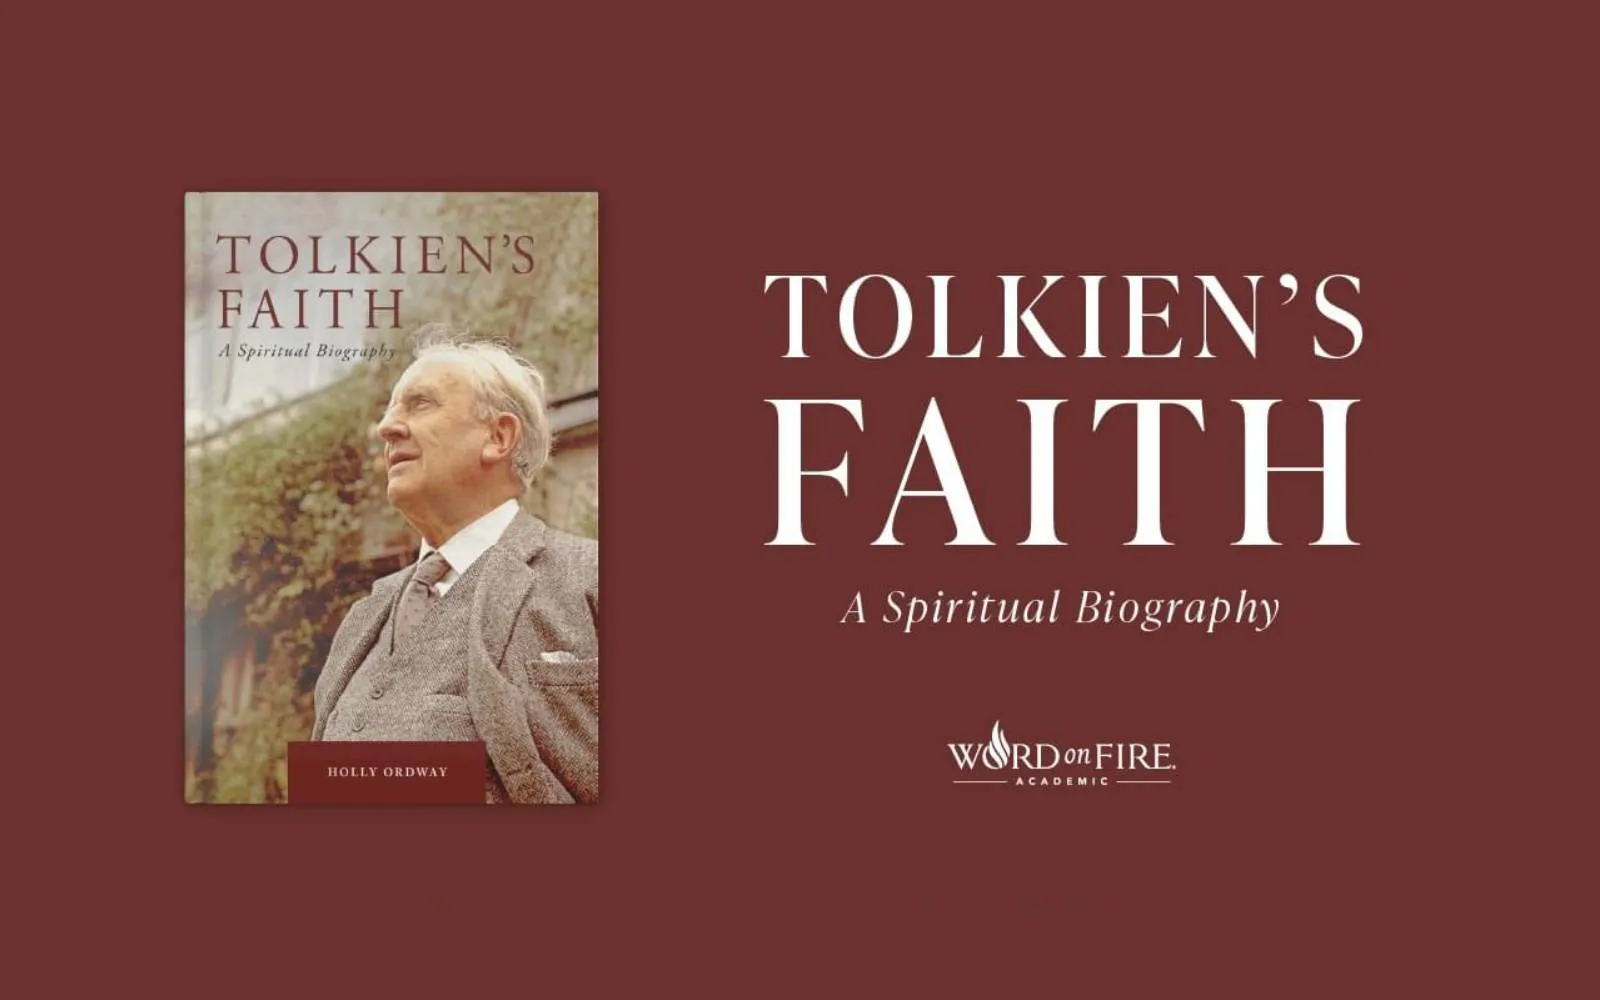 Material promocional de Tolkien's Faith (La fe de Tolkien) de Holly Ordway.?w=200&h=150